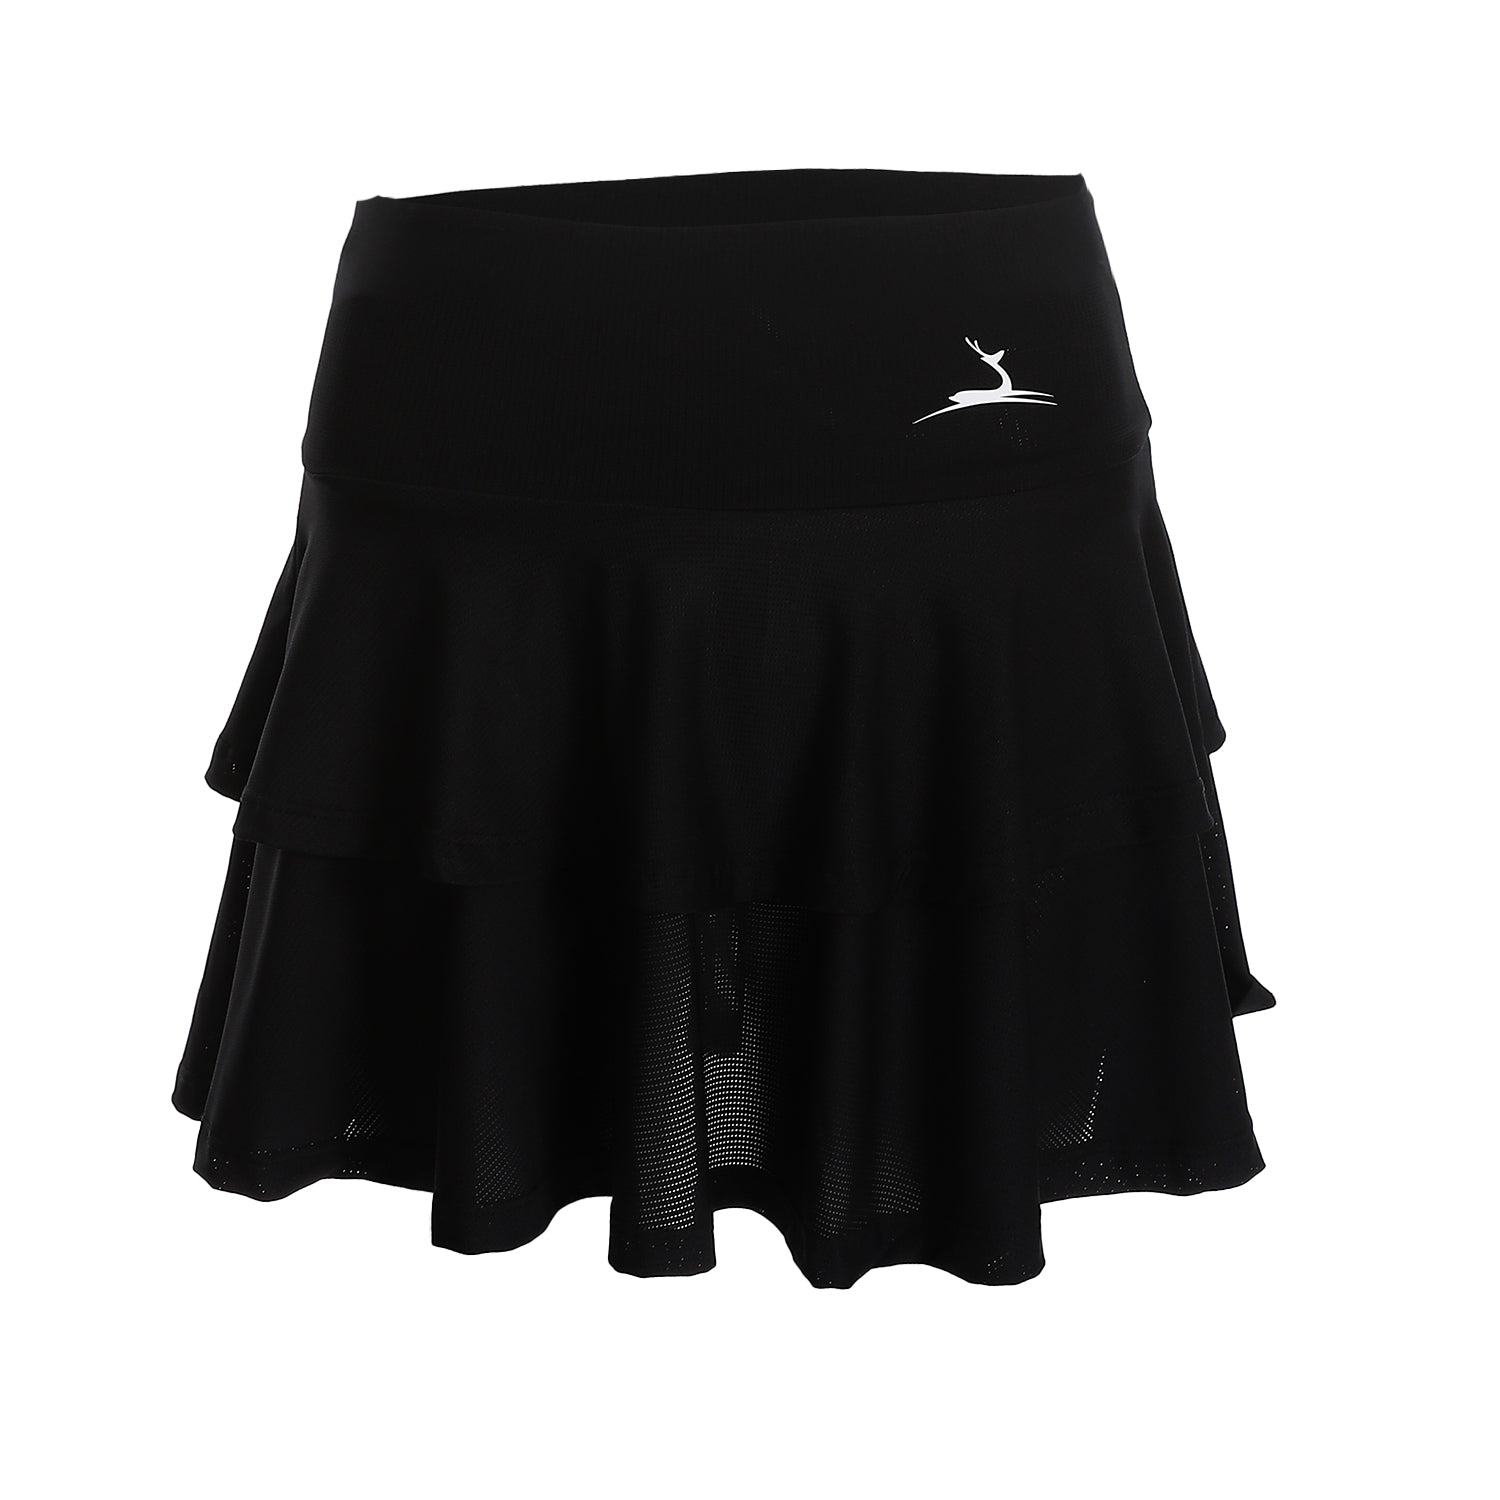 Doe double ruffles sports skirt